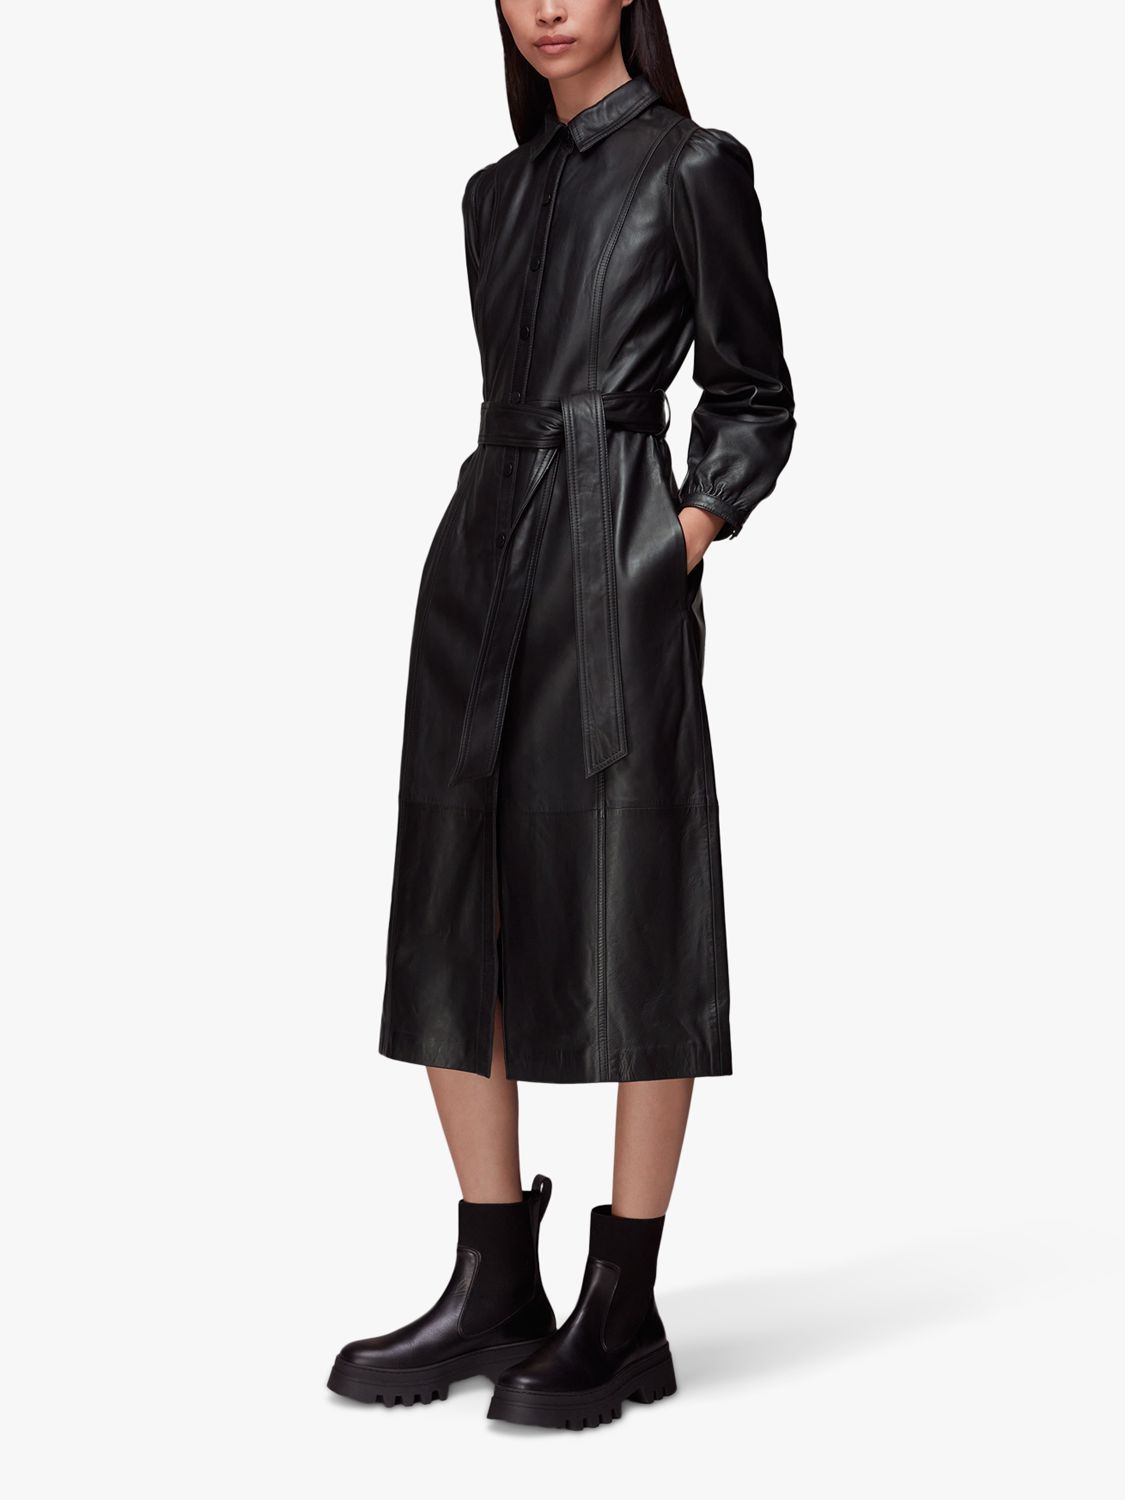 Whistles Phoebe Leather Shirt Midi Dress, Black at John Lewis & Partners